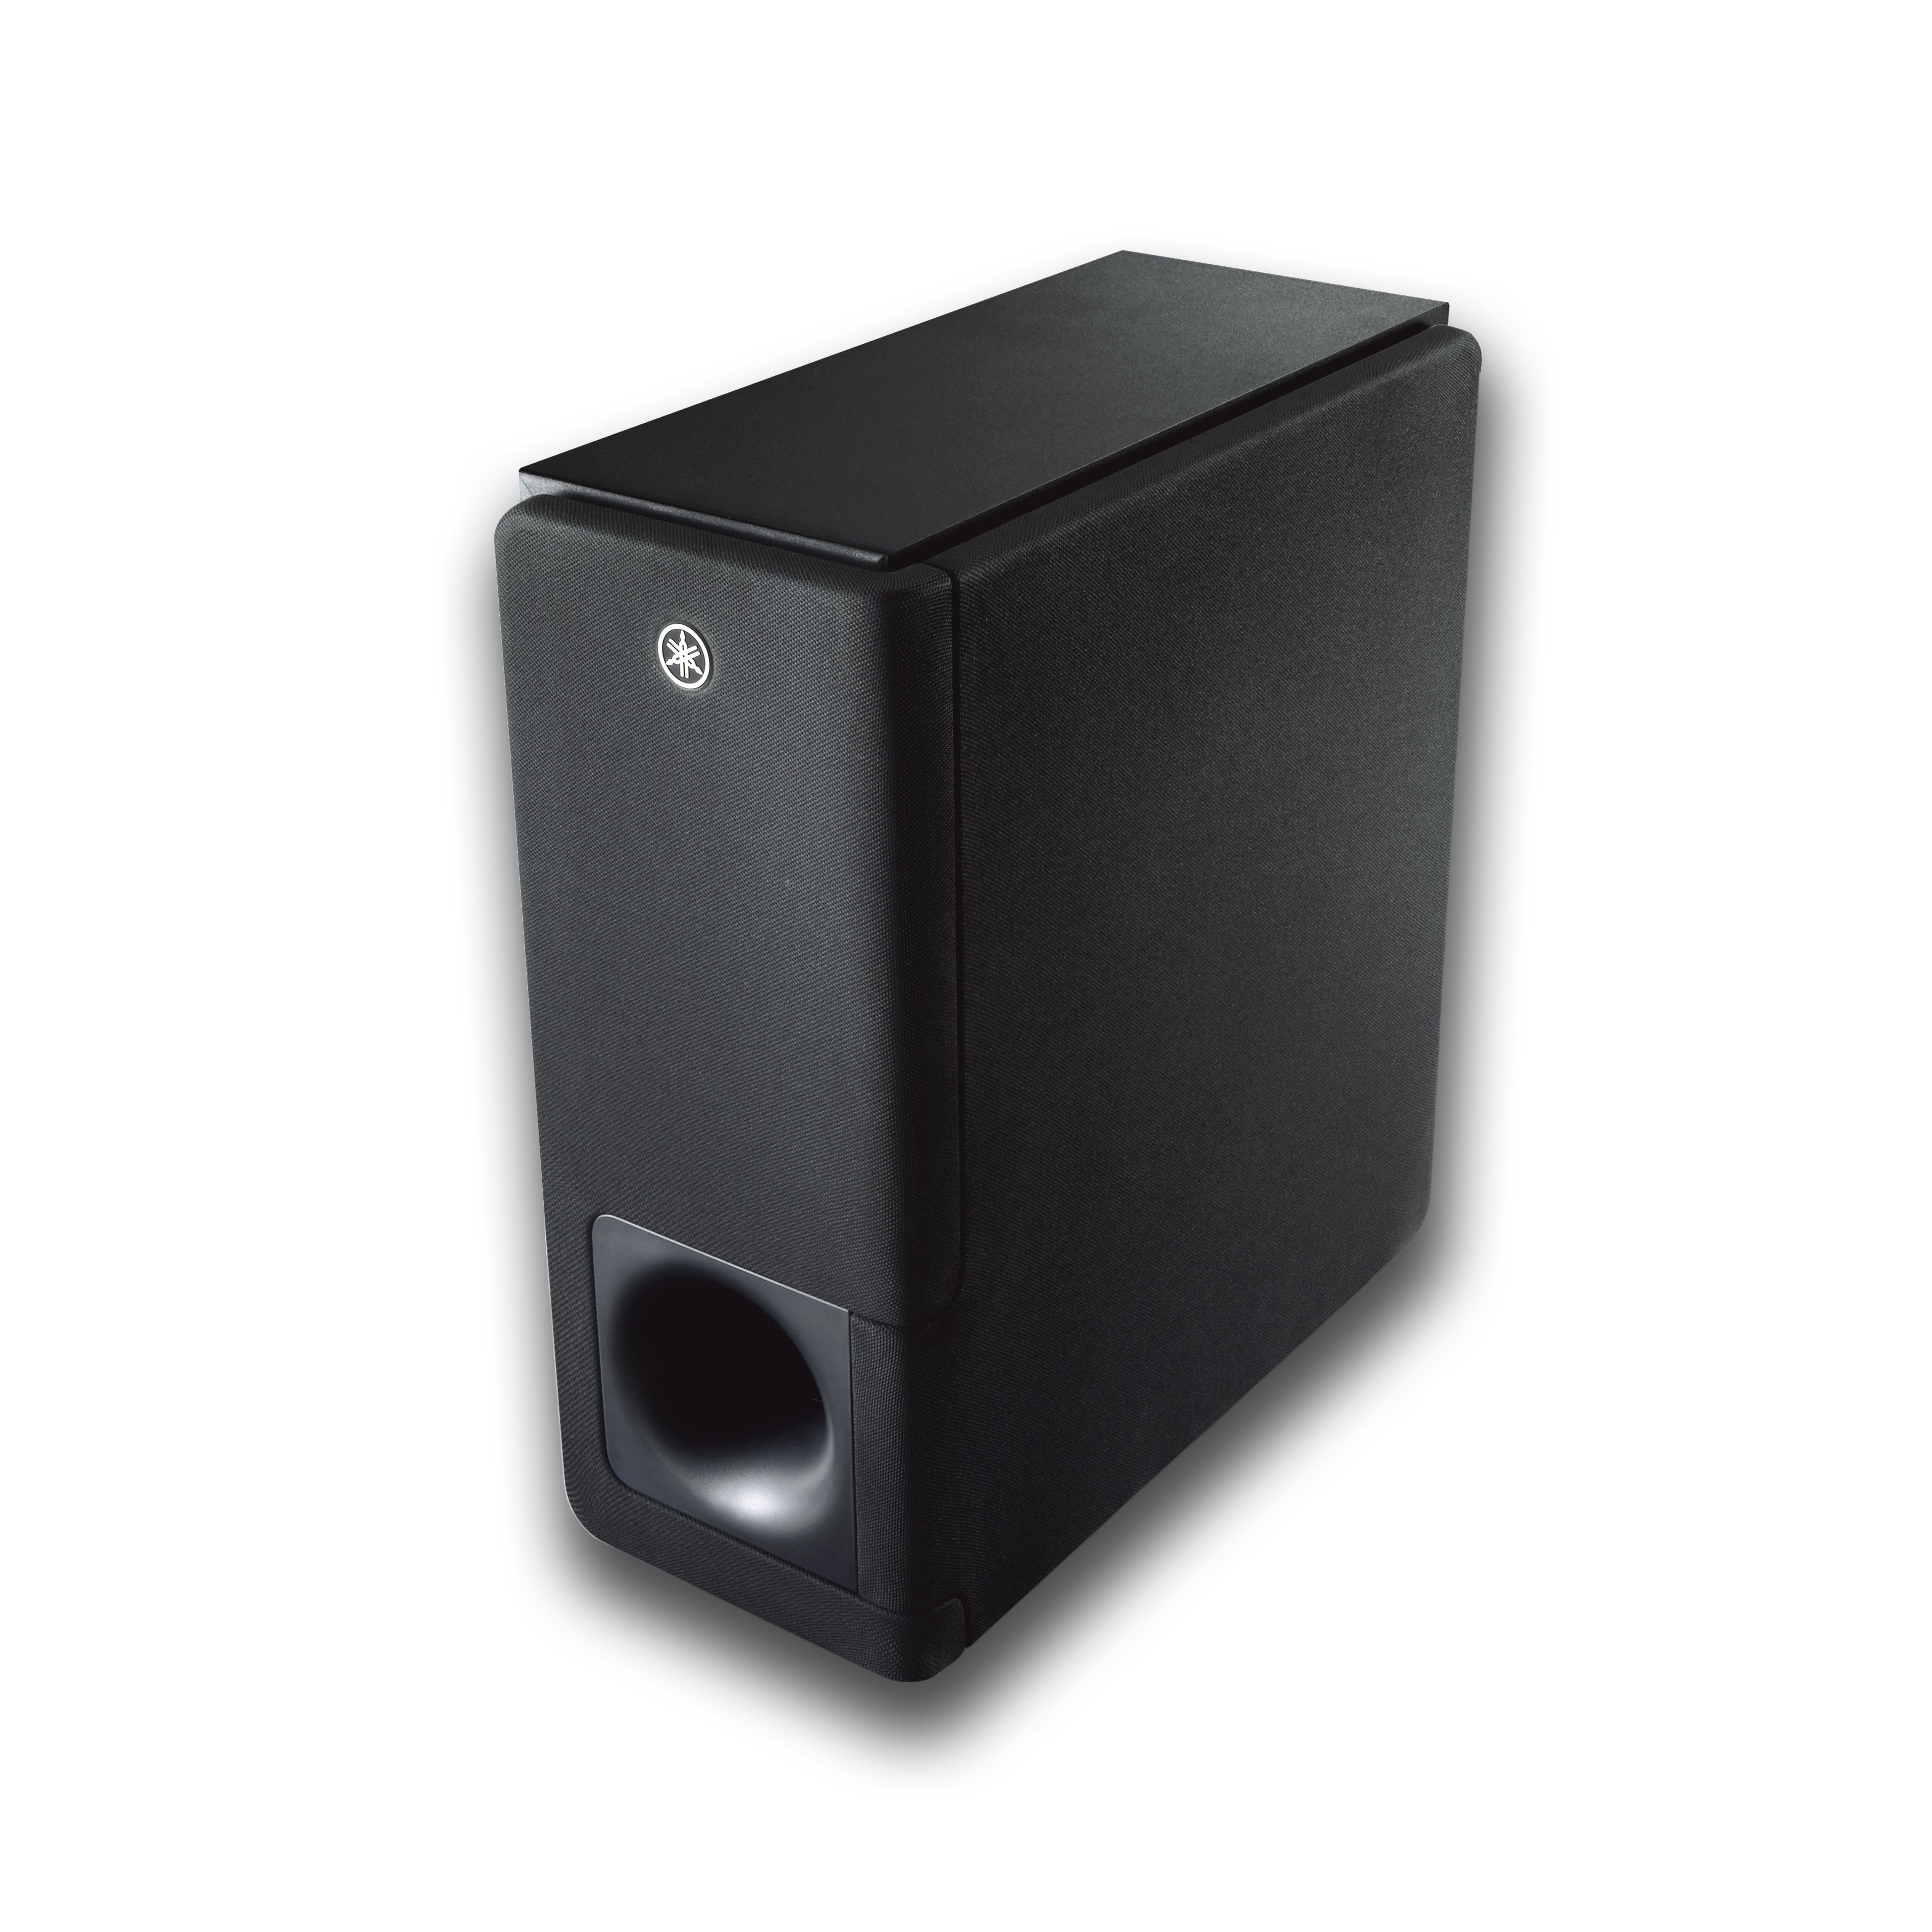 YAS-207 - Overview - Sound Bars - Audio Visual - Products Yamaha United States